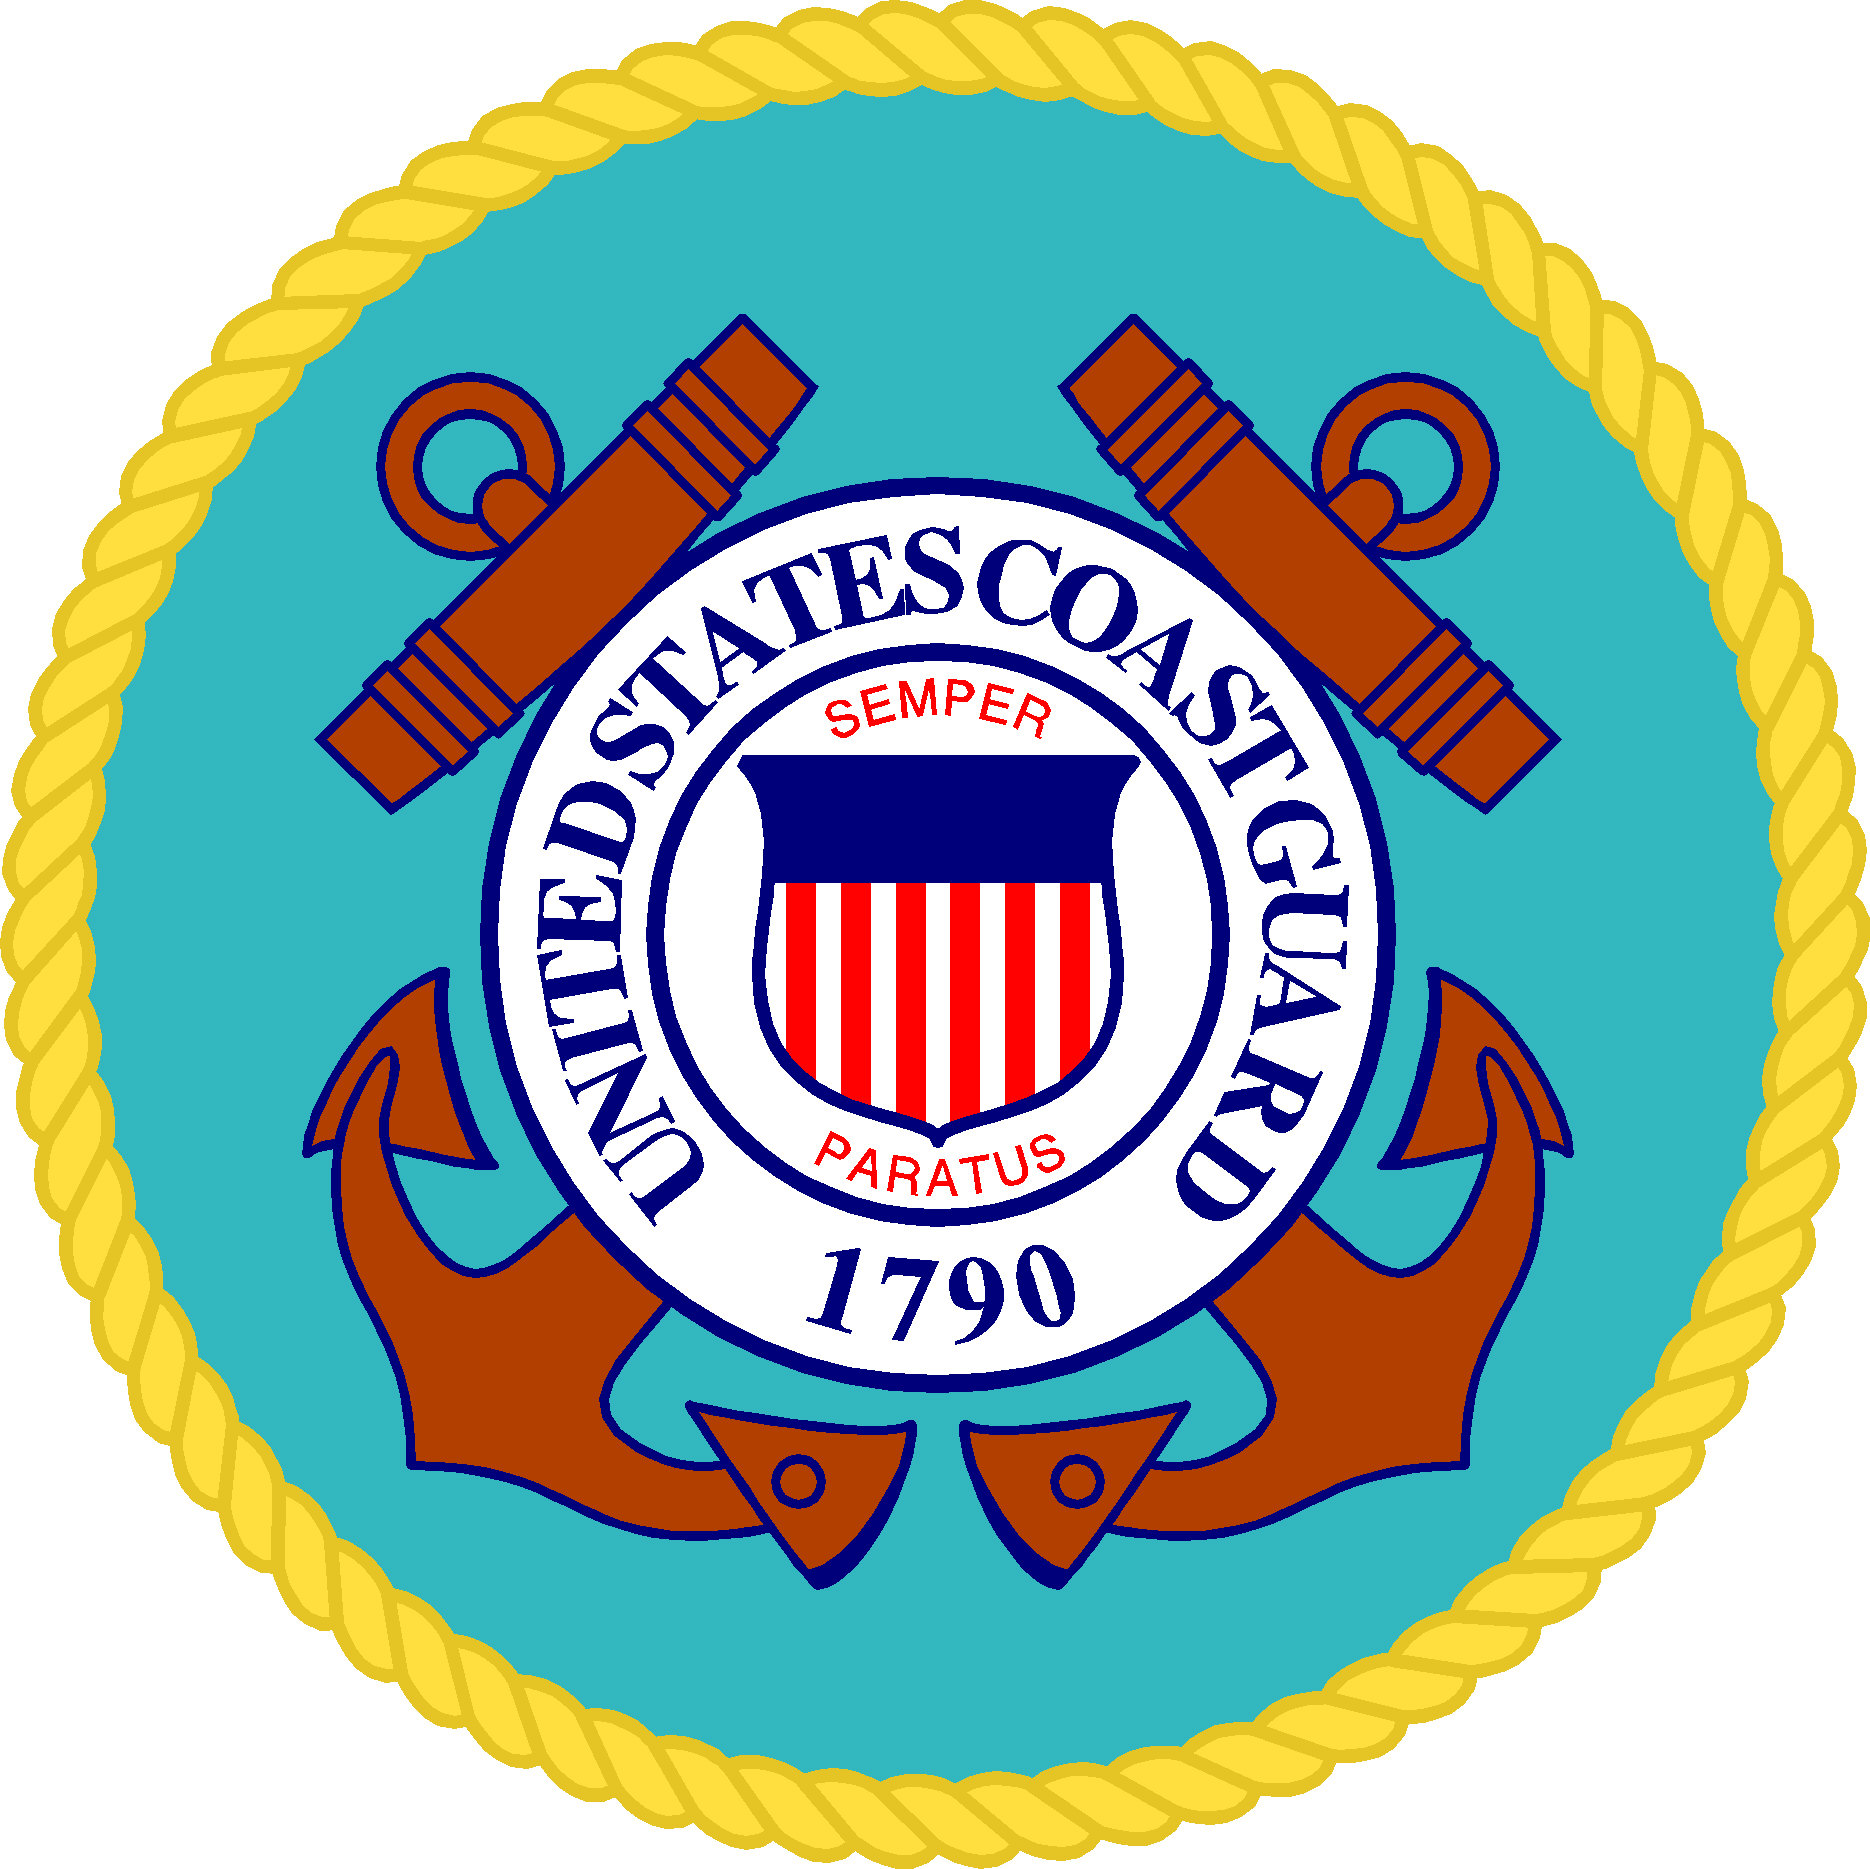 USCG Main seal